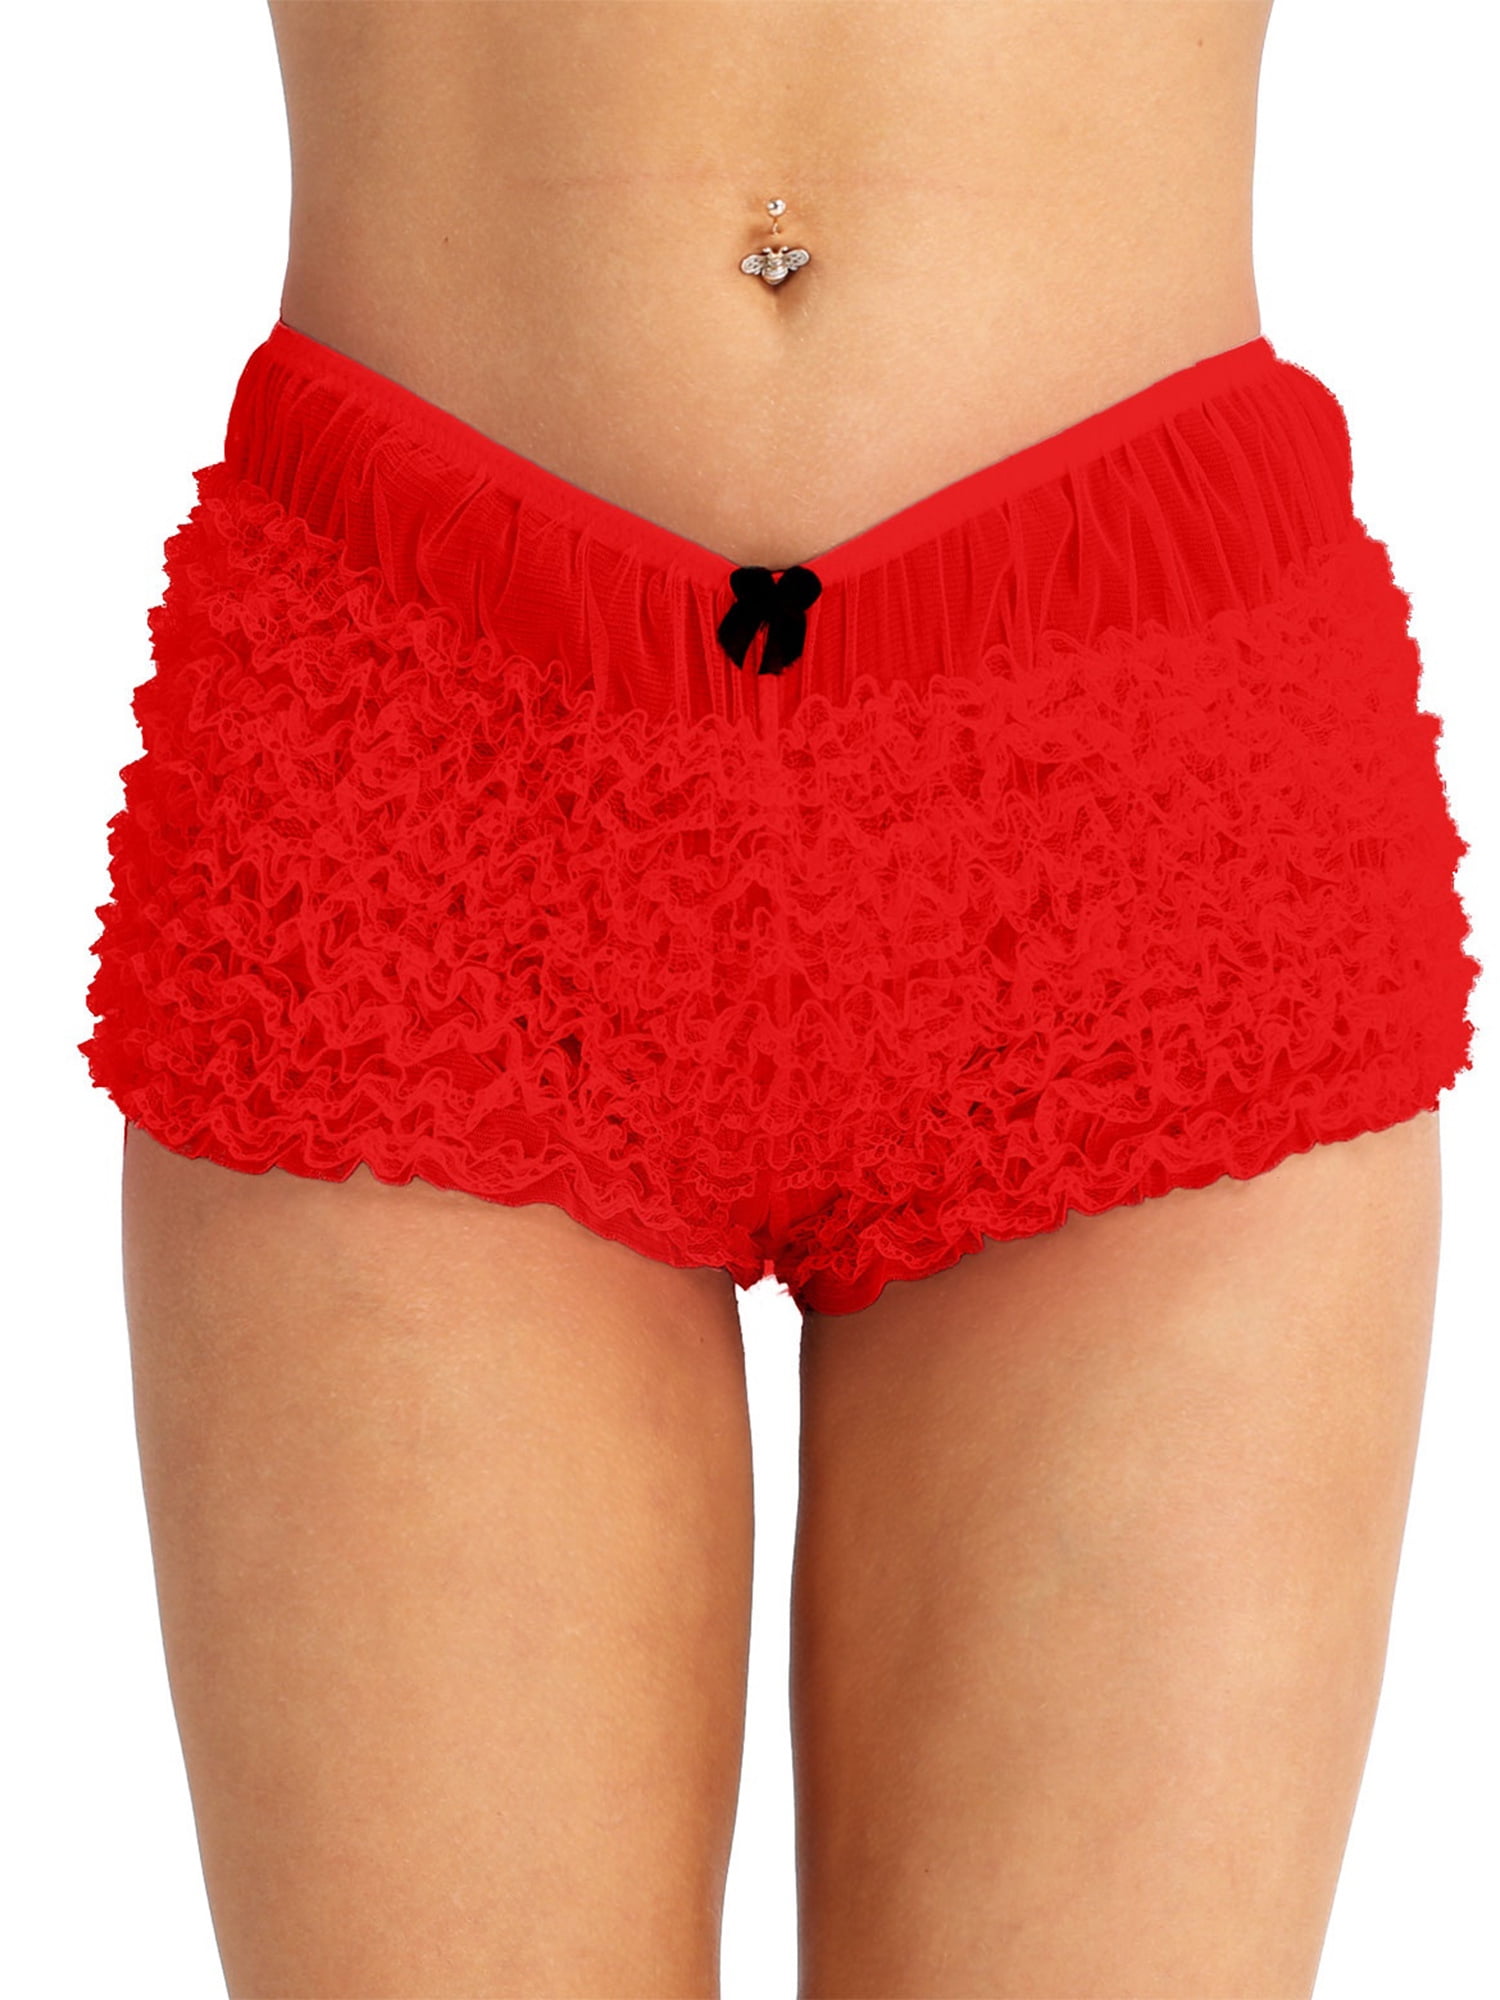 DPOIS Women's French Maid Ruffle Lace Trim Cheeky Panty Boyshort Tanga  Shorts Red One_Size 